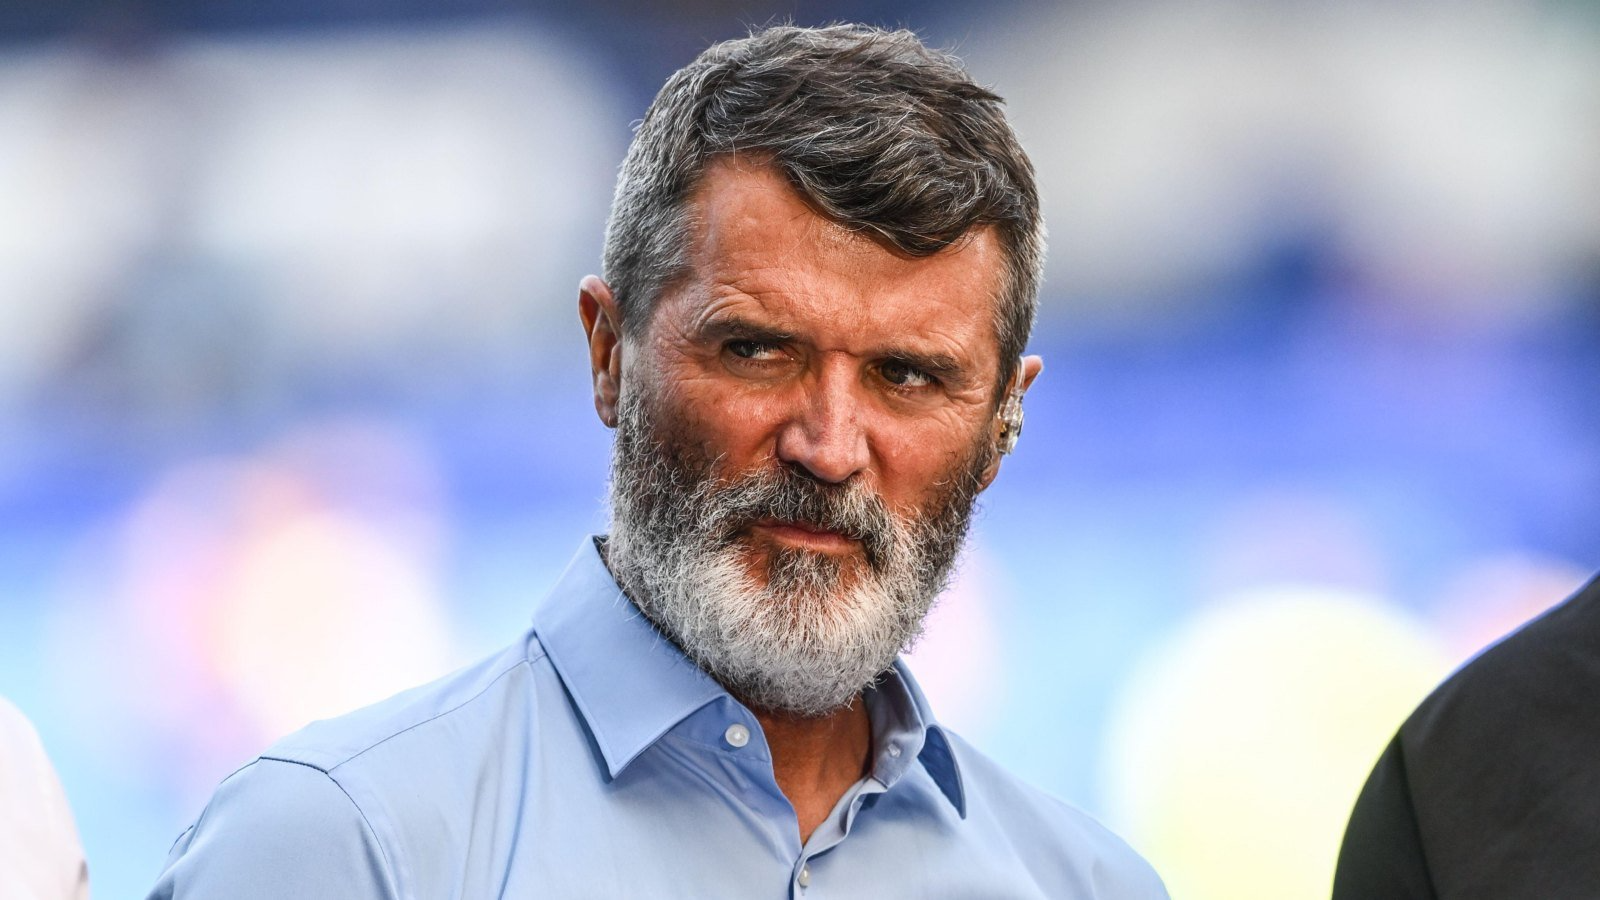 Police Investigate Alleged Attack On Former Footballer Roy Keane At Emirates Stadium